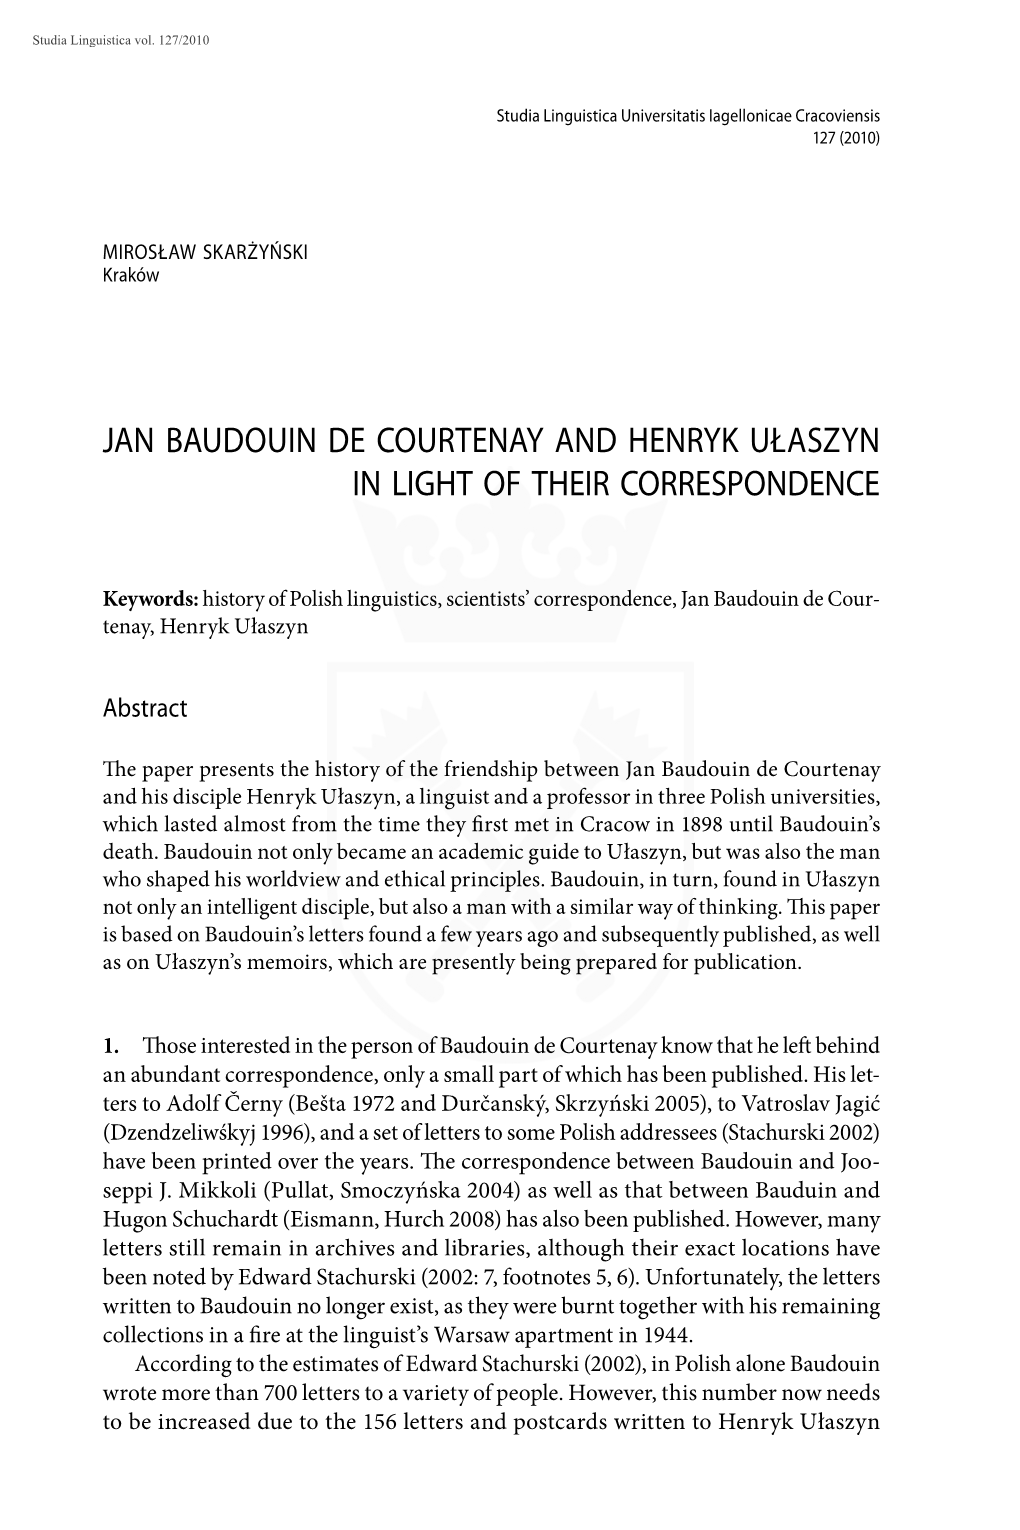 Jan Baudouin De Courtenay and Henryk Ułaszyn in Light of Their Correspondence